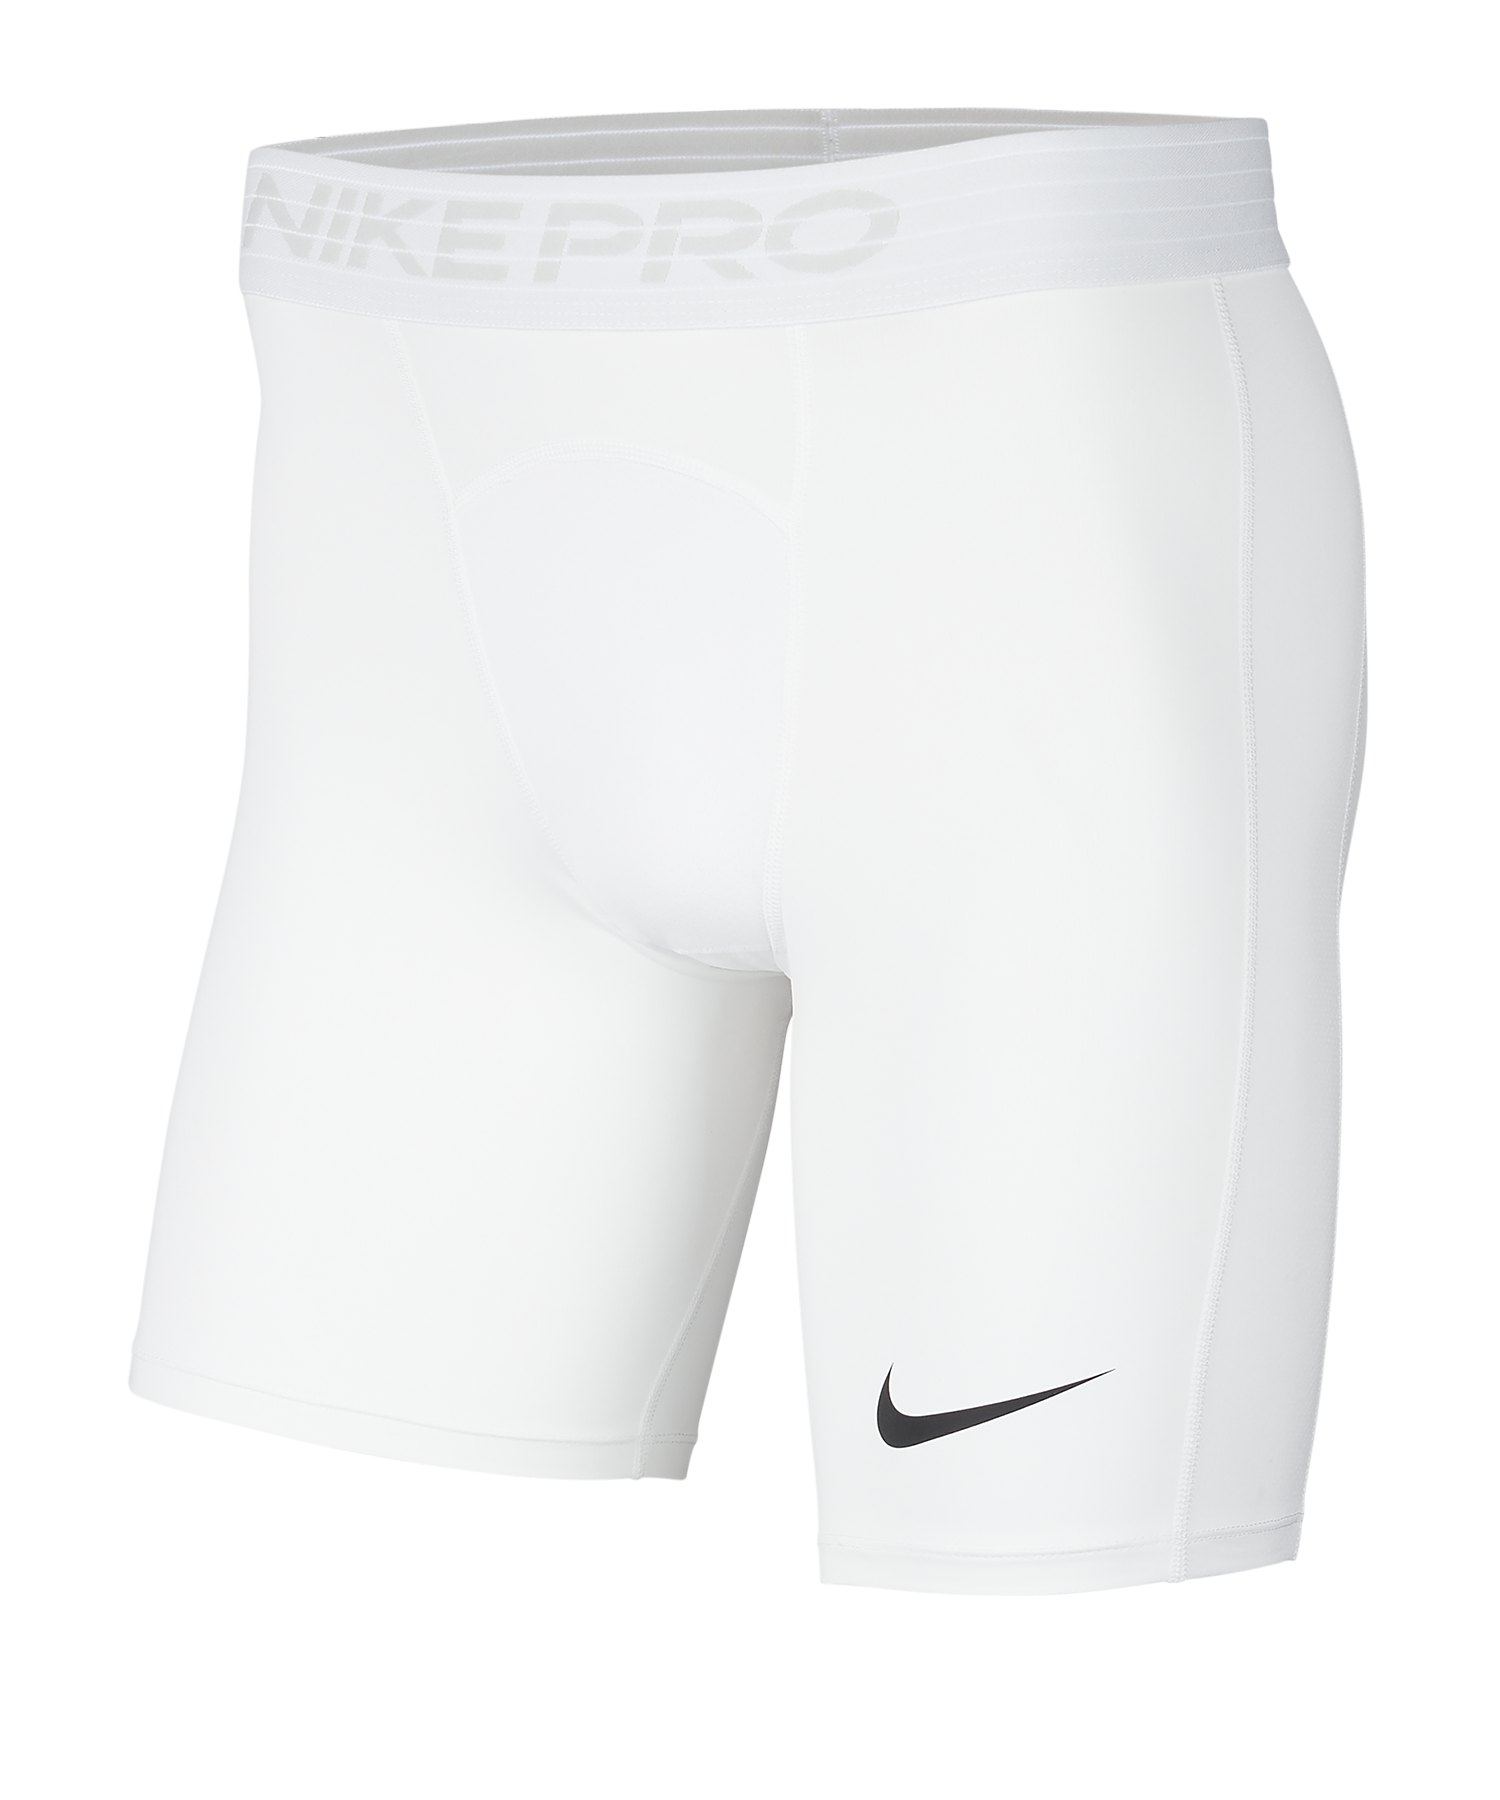 Nike Pro Shorts Weiss F100 - weiss